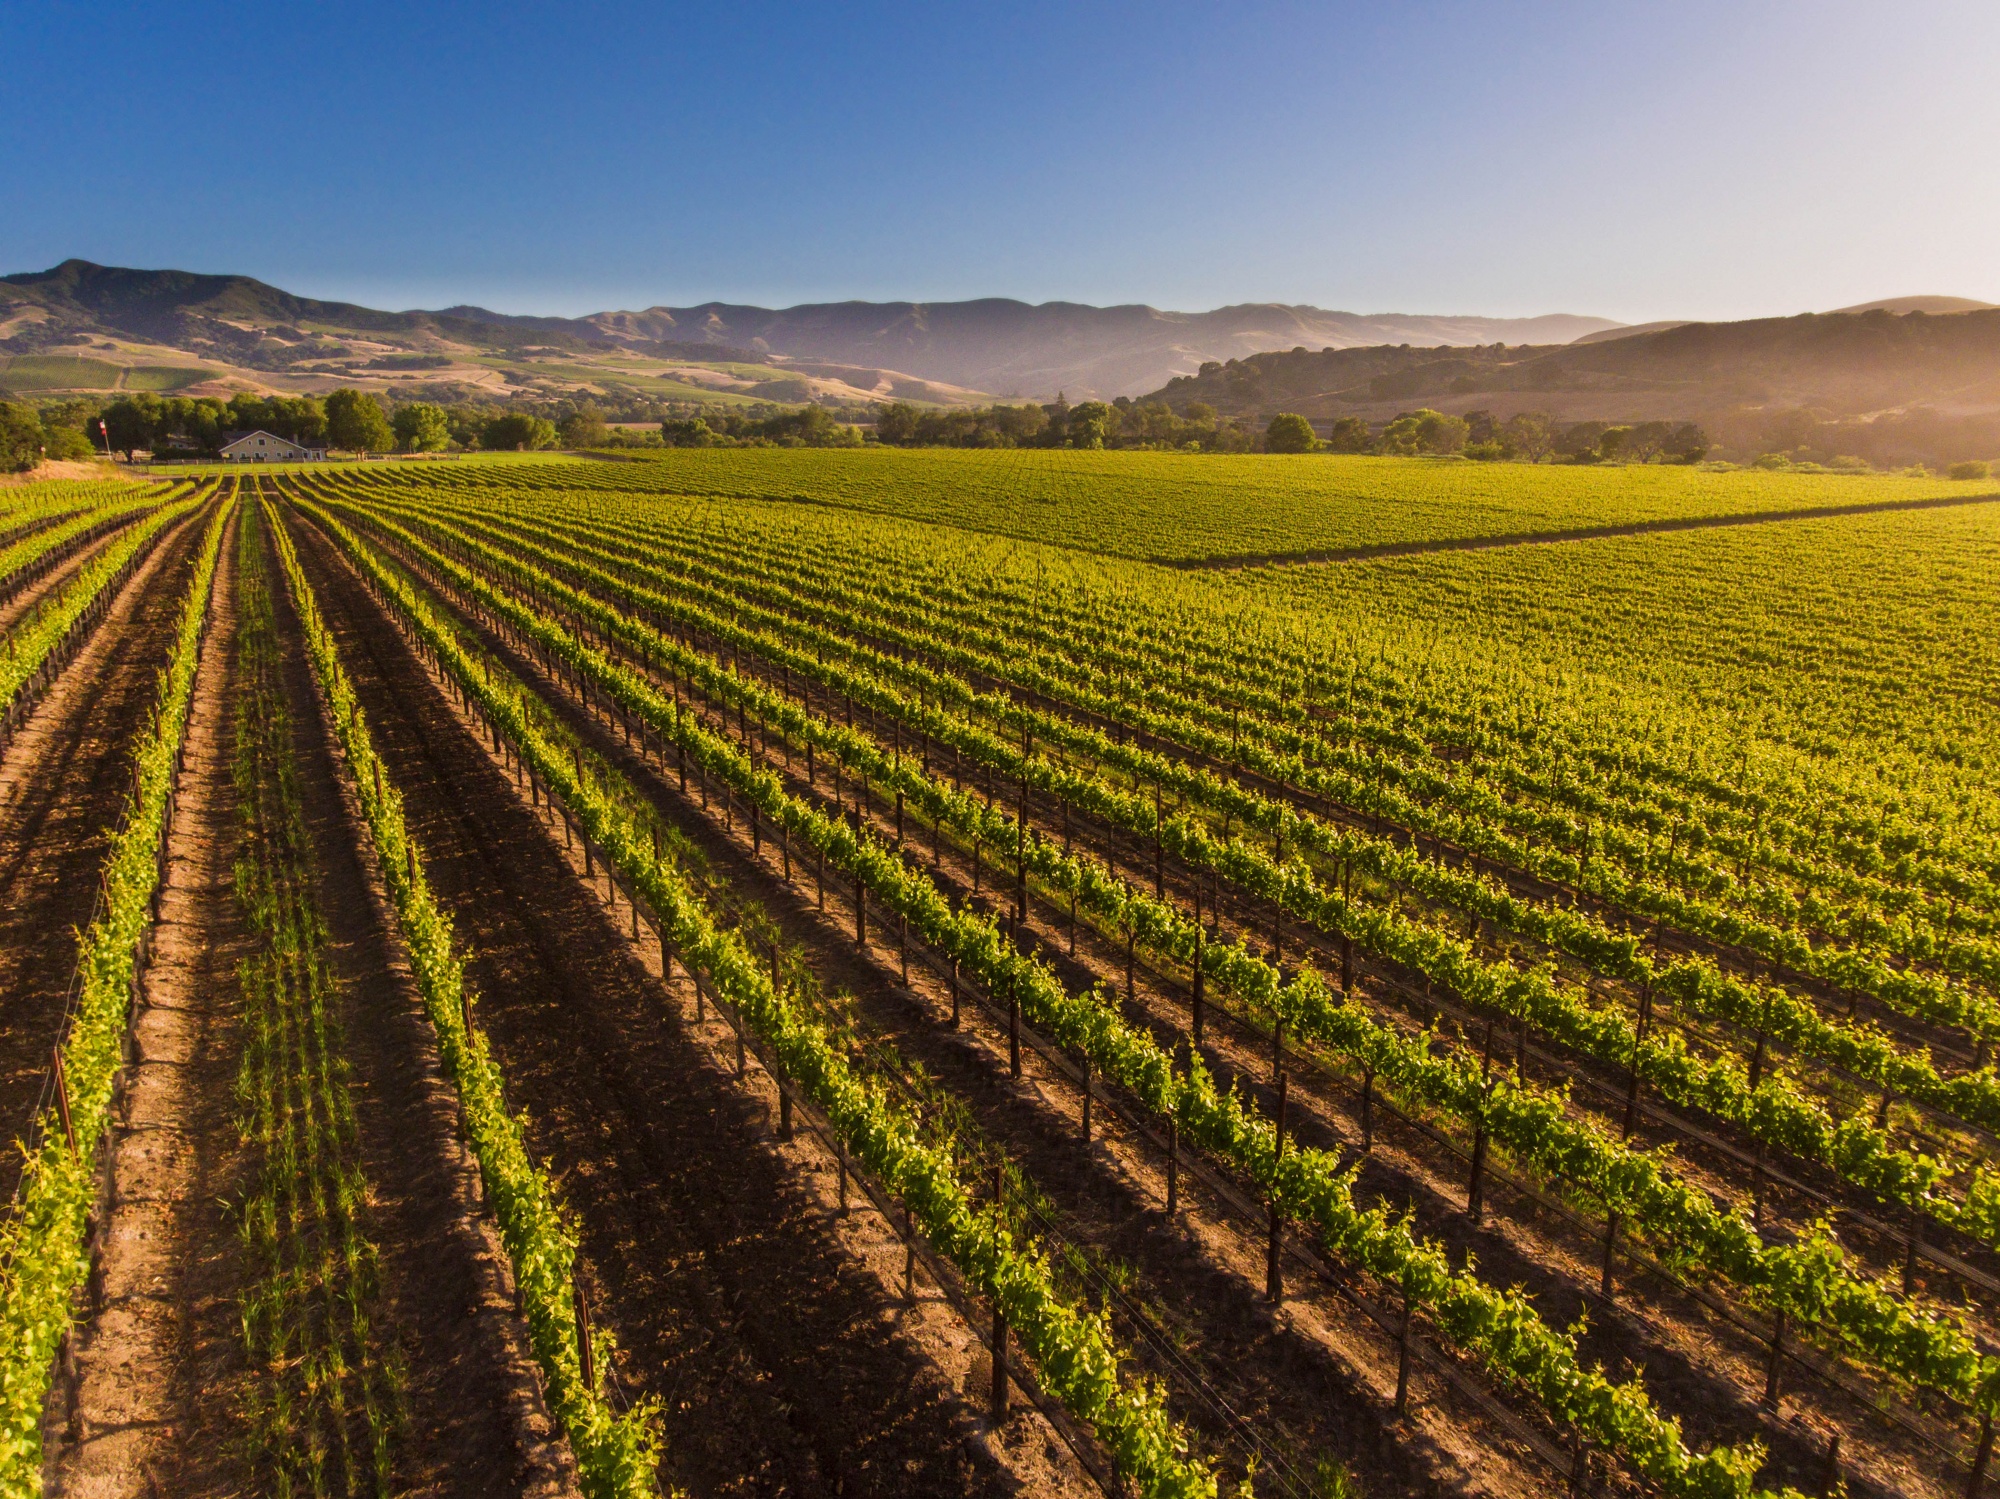 Best remote destinations, picturesque, agricultural vineyard in Santa Ynez Valley California